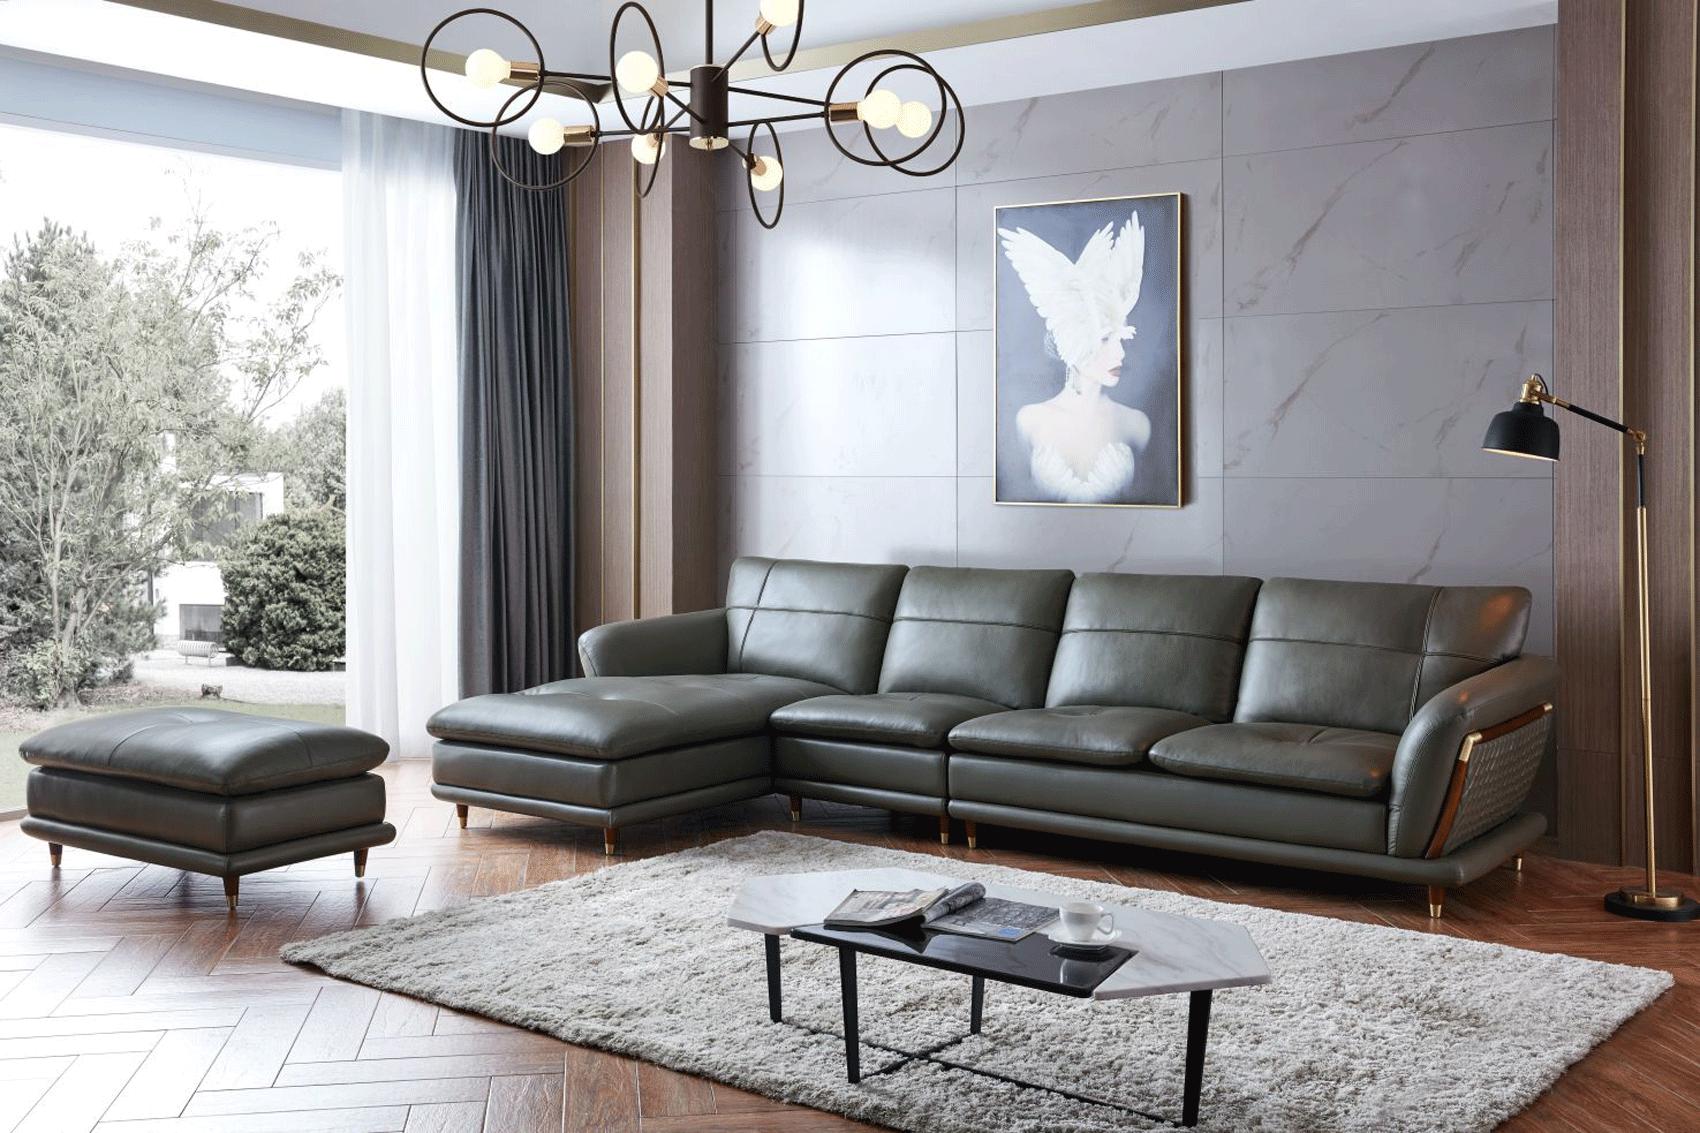 

    
Dark Grey Top-grain Leather Sectional Sofa Set 2Pcs Contemporary ESF 9180
